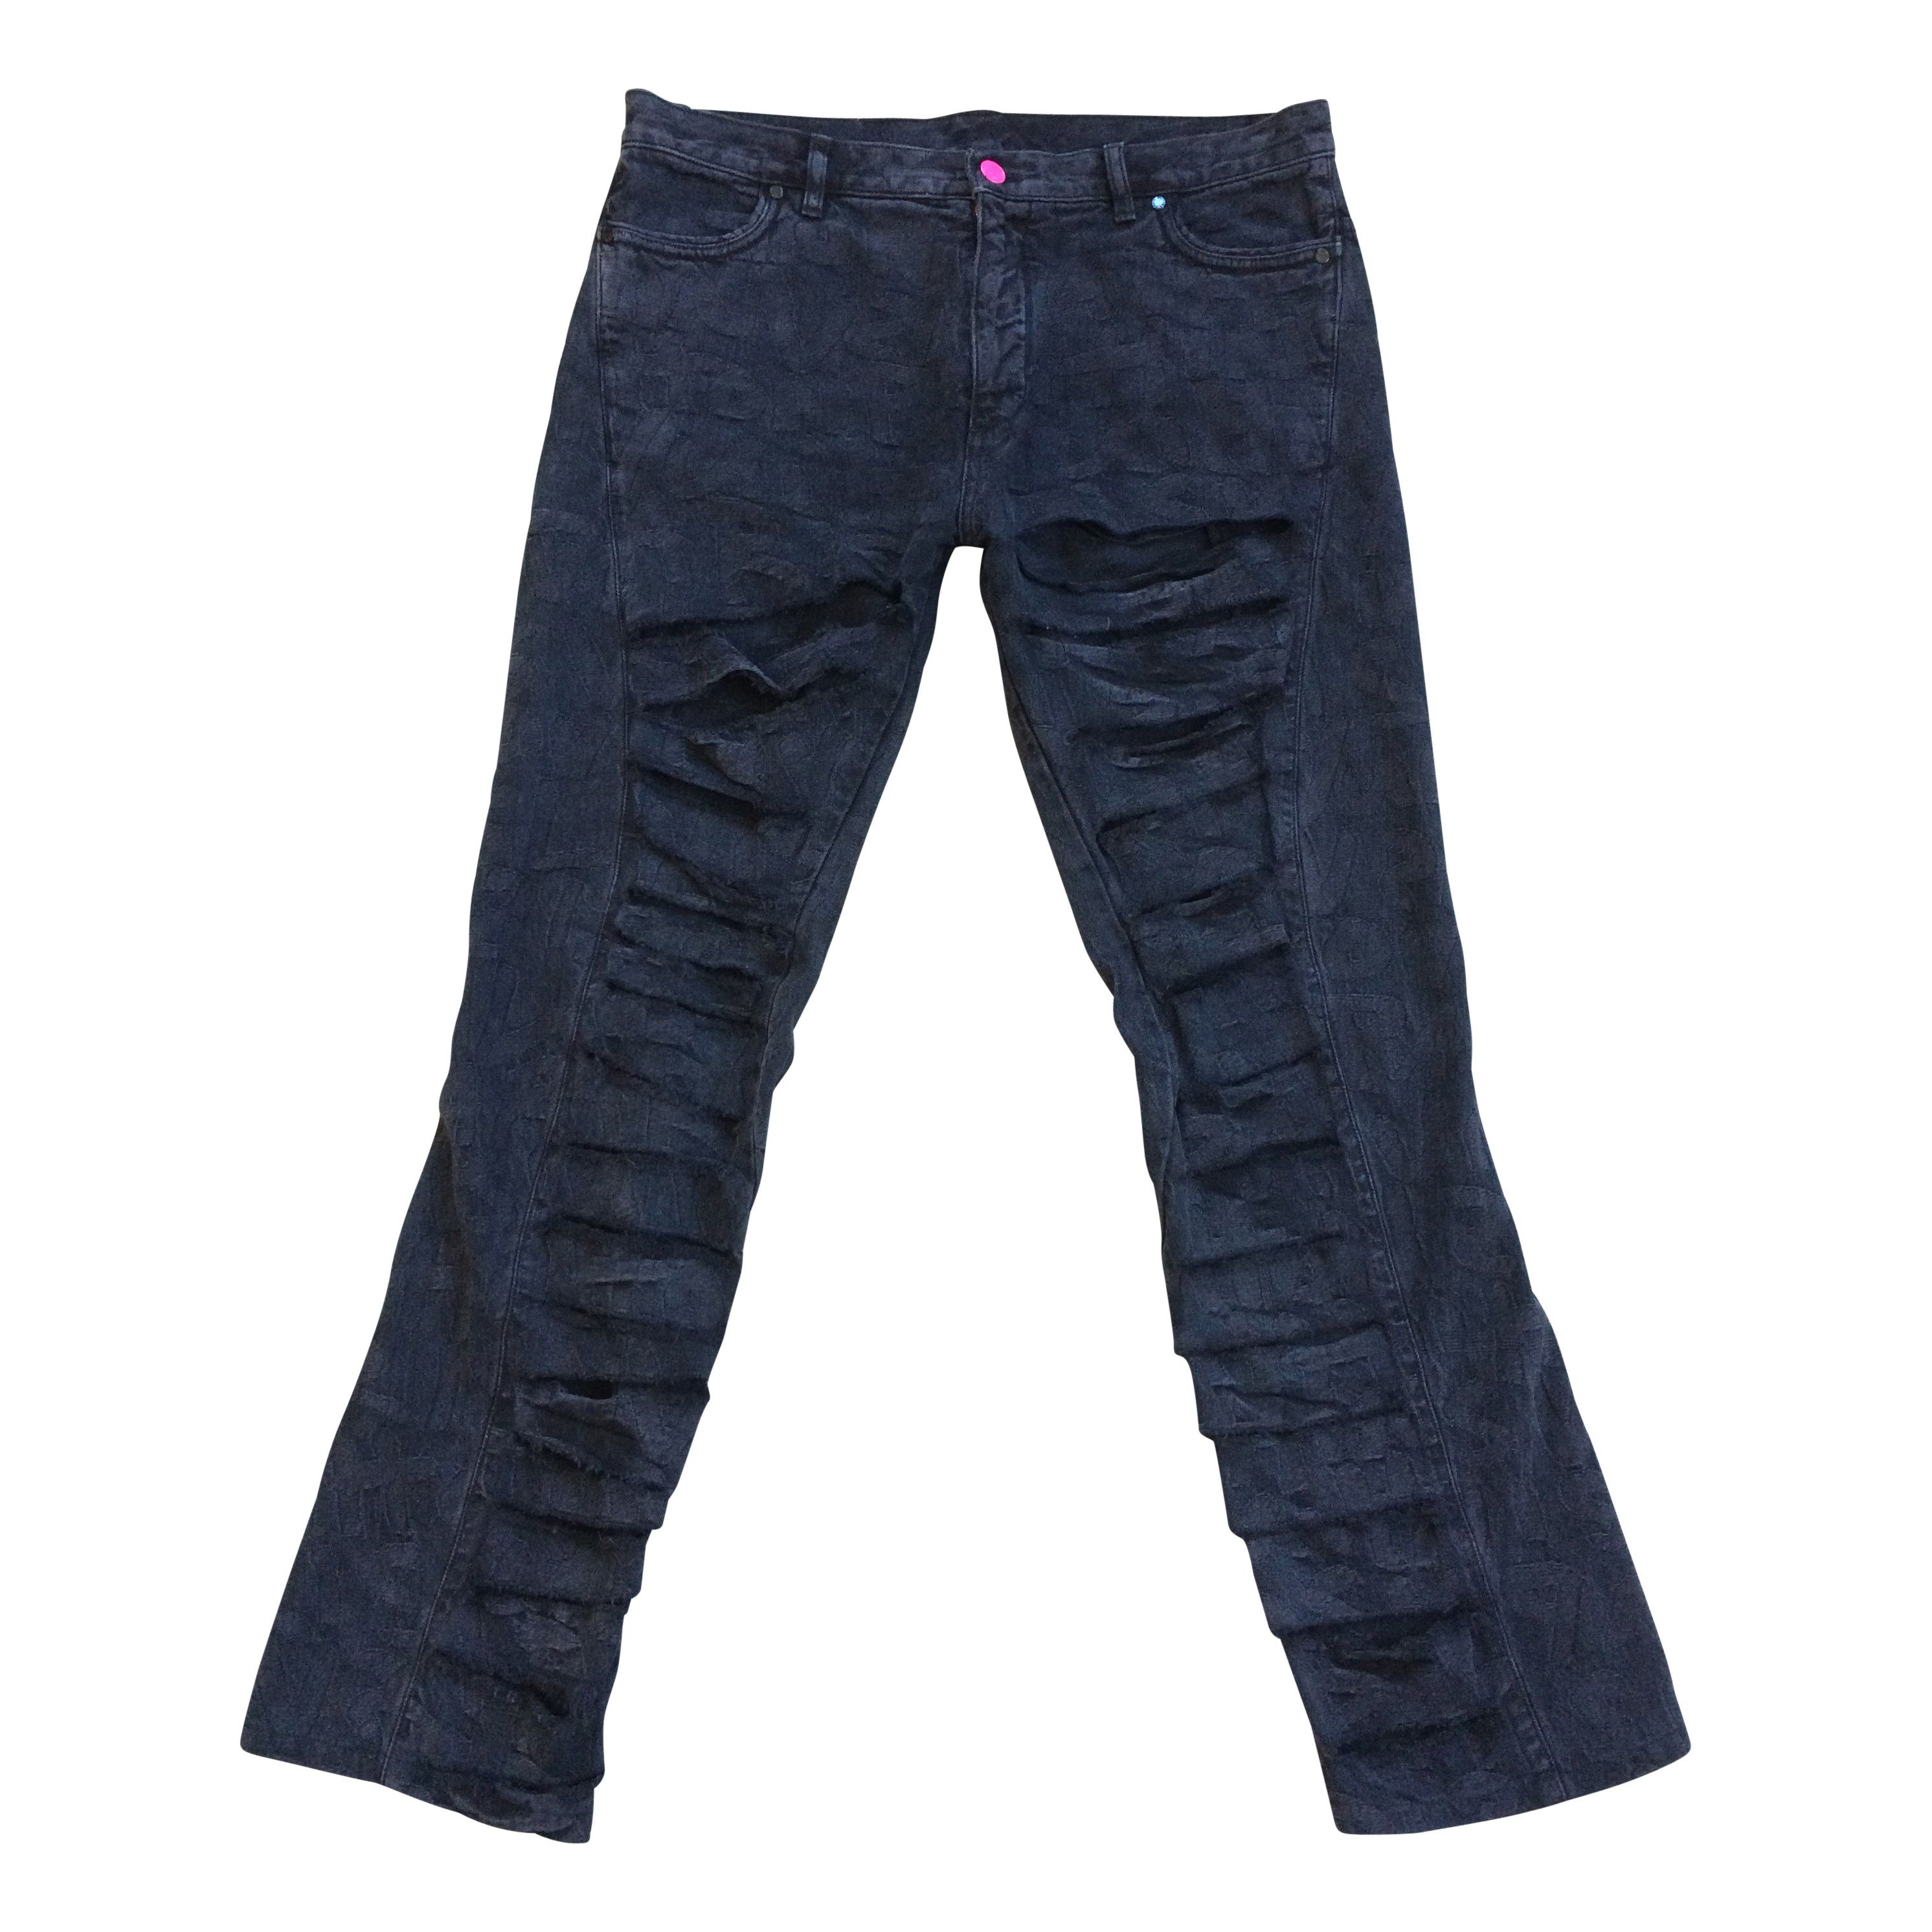 Louis vuitton stephen sprouse black graffiti logo jeans 38 – Dusty